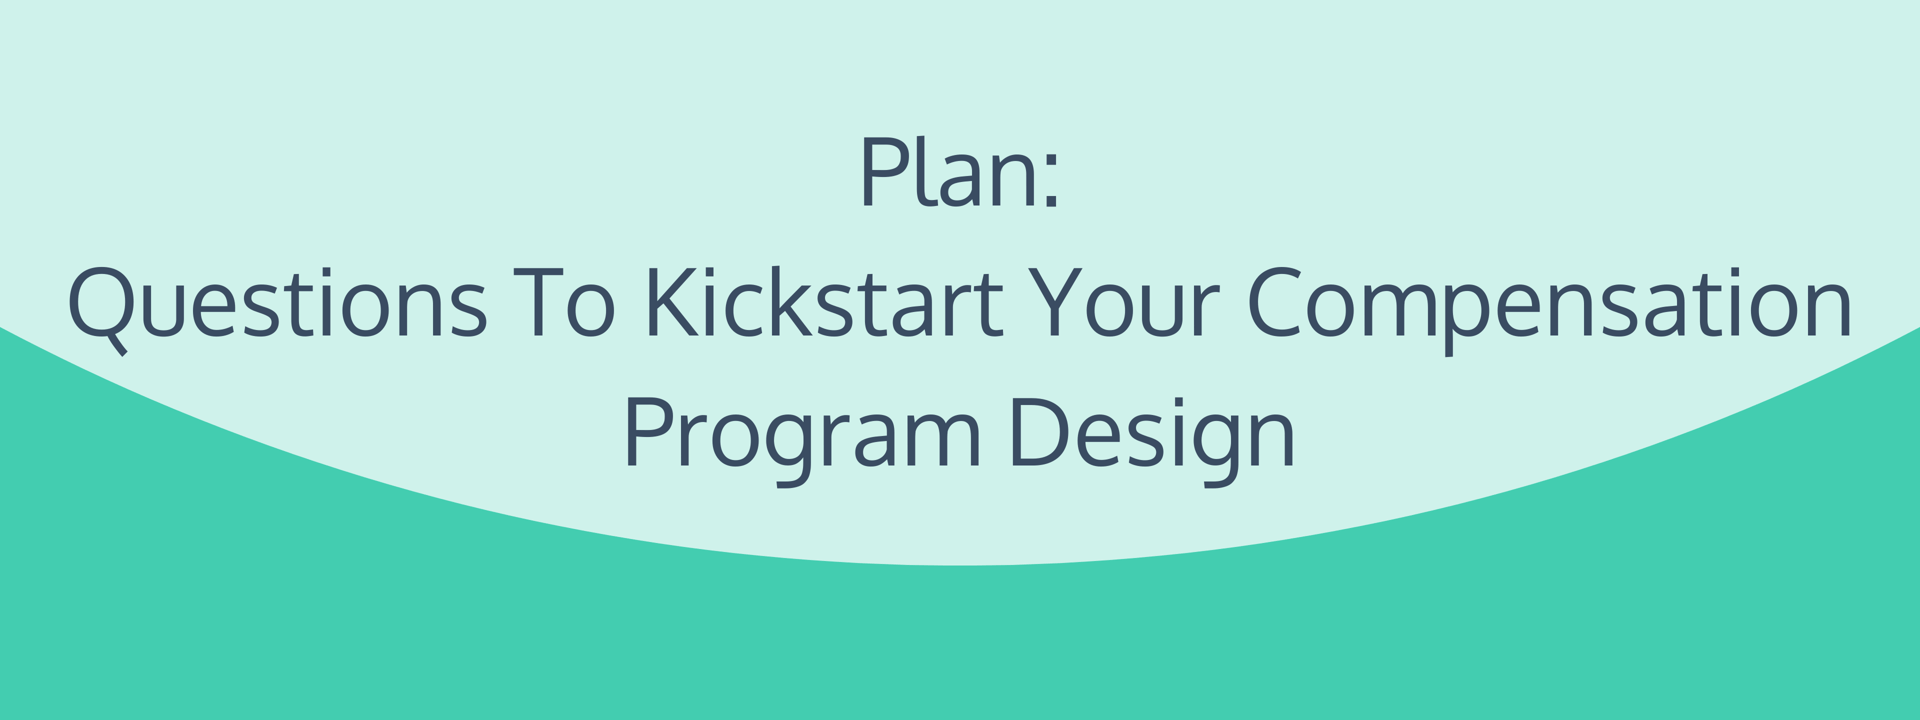 Plan: Questions to Kickstart Your Remote Compensation Program Design